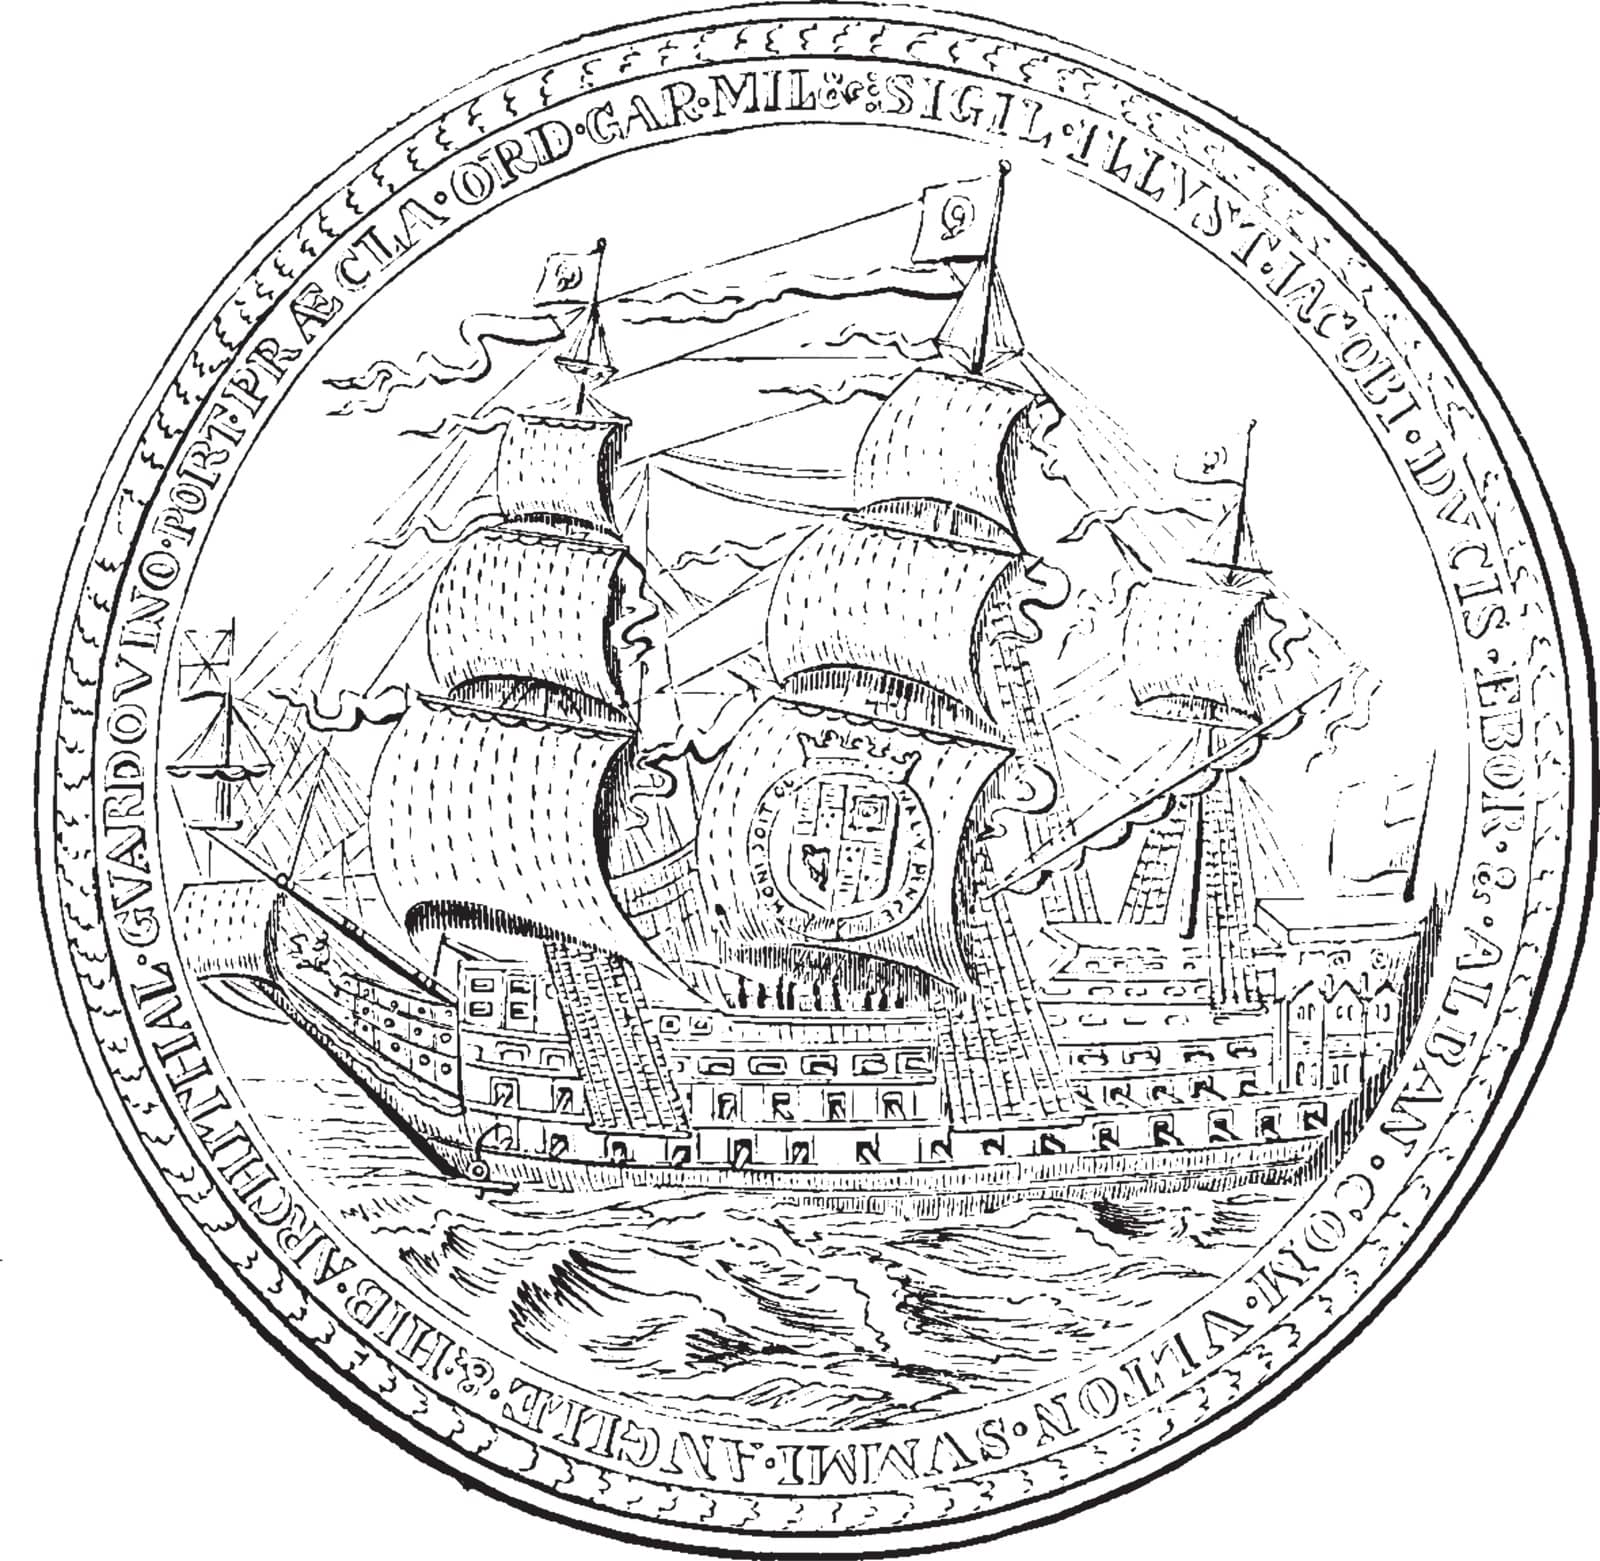 Medal struck in honour of James Duke of York By Thomas Simon, vintage line drawing or engraving illustration.